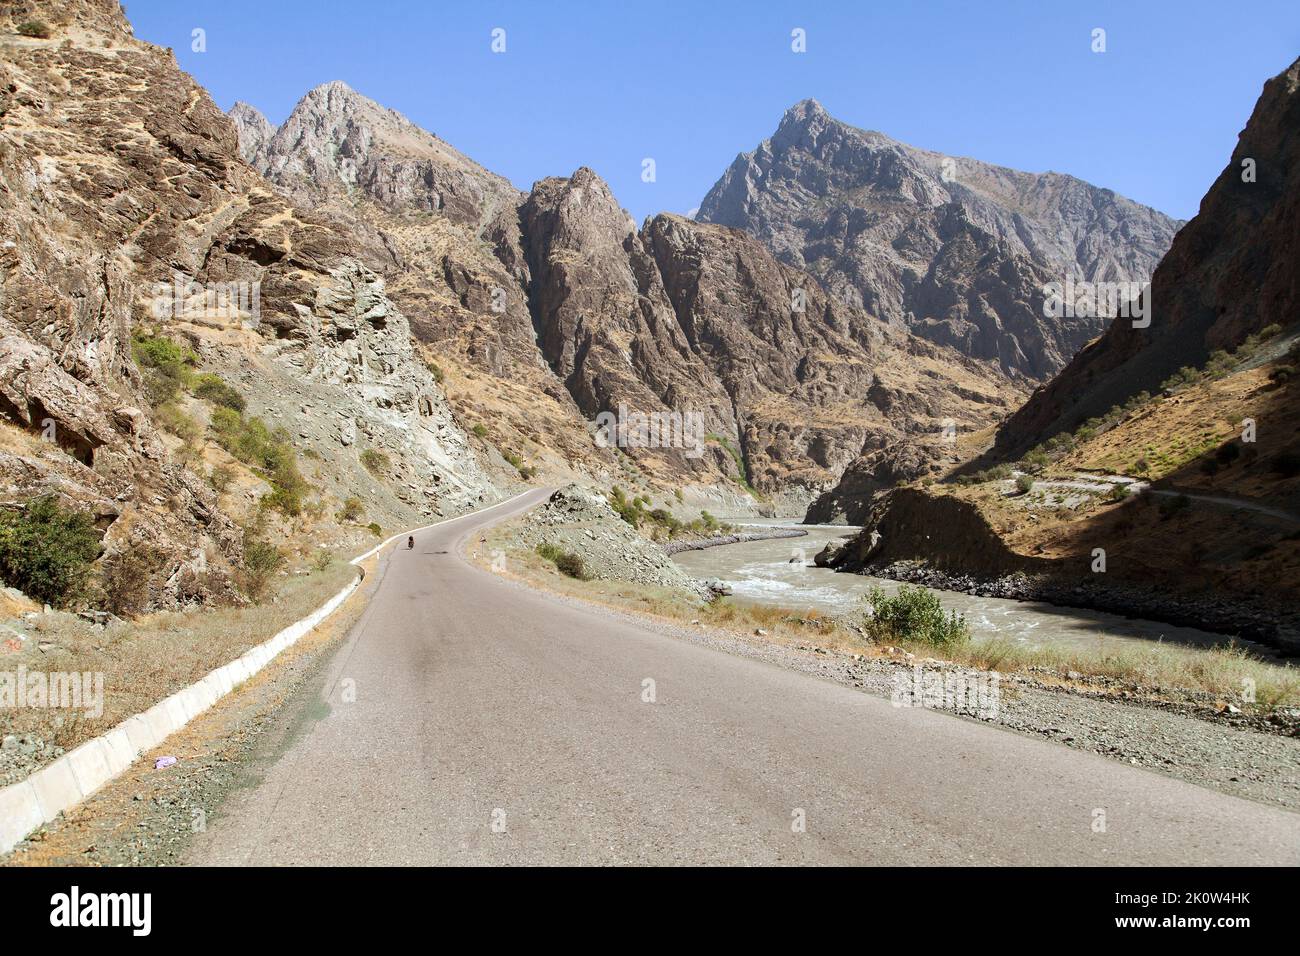 Panj river and Pamir mountains, Panj is upper part of Amu Darya river, Panoramic view from Tajikistan and Afghanistan border, Gorno-badakhshan region, Stock Photo